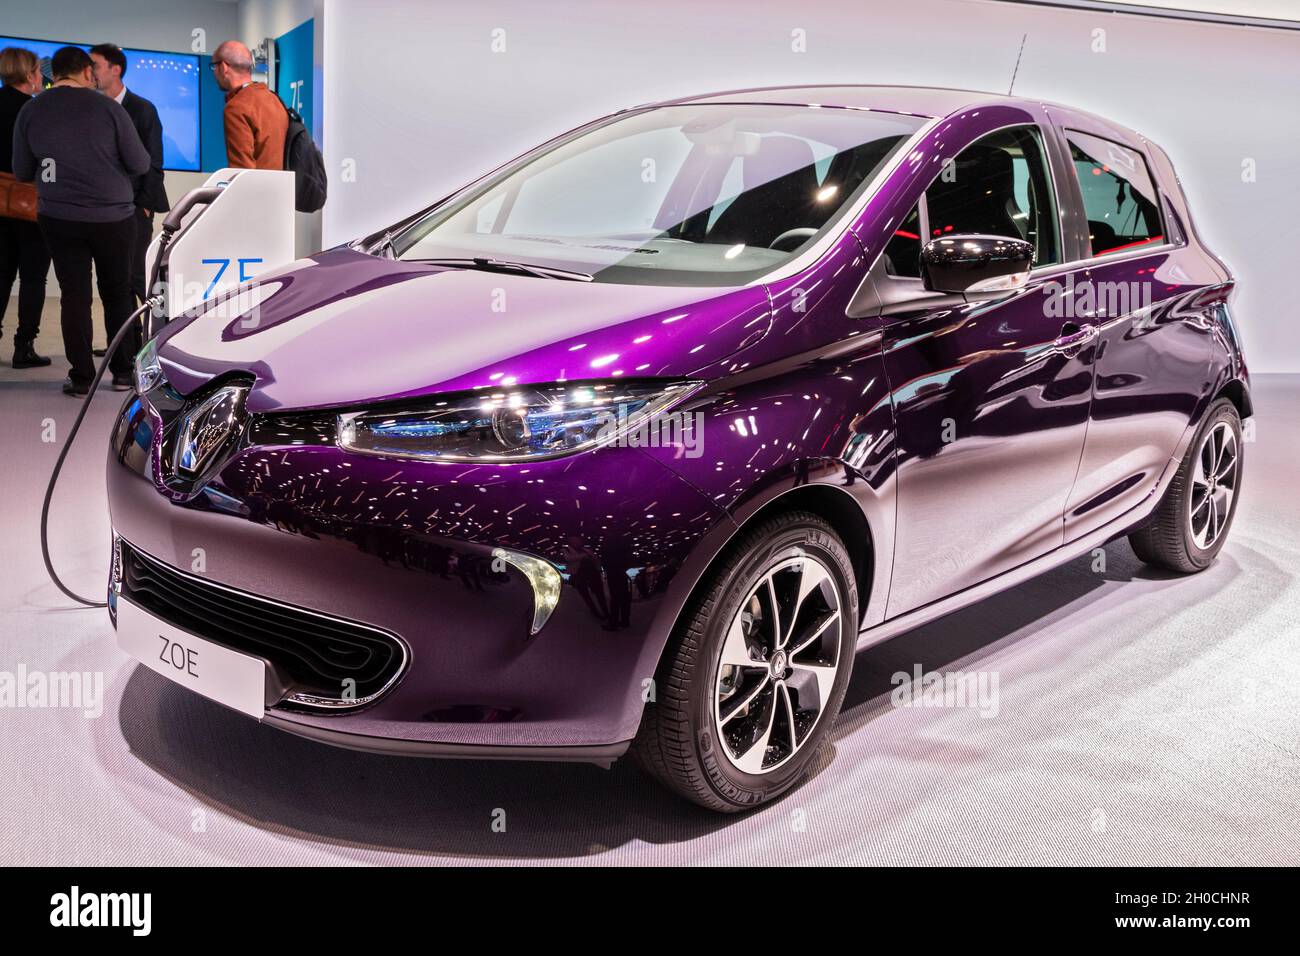 Renault Zoe electric car model showcased at the Paris Motor Show. Paris,  France - October 2, 2018 Stock Photo - Alamy